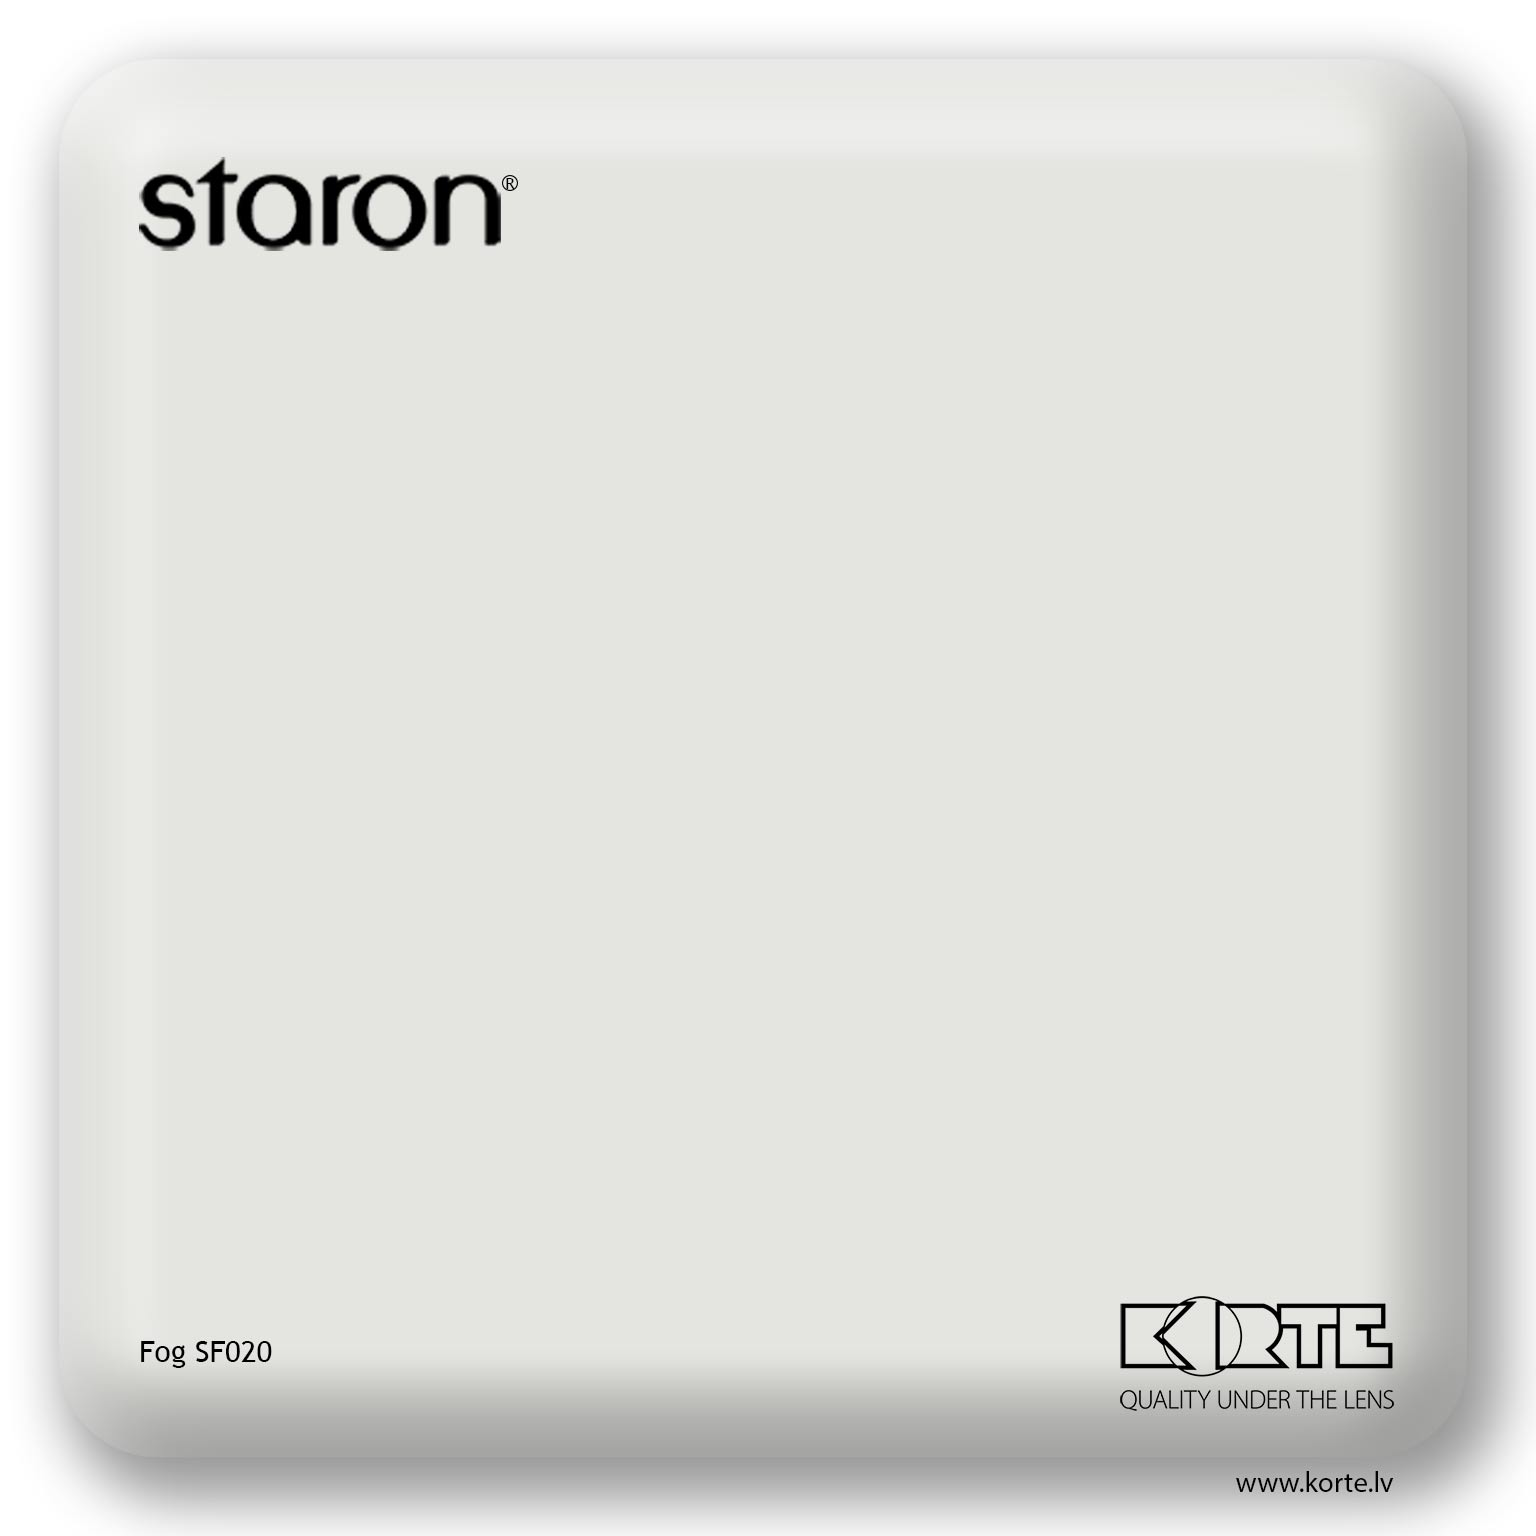 Staron Fog SF020